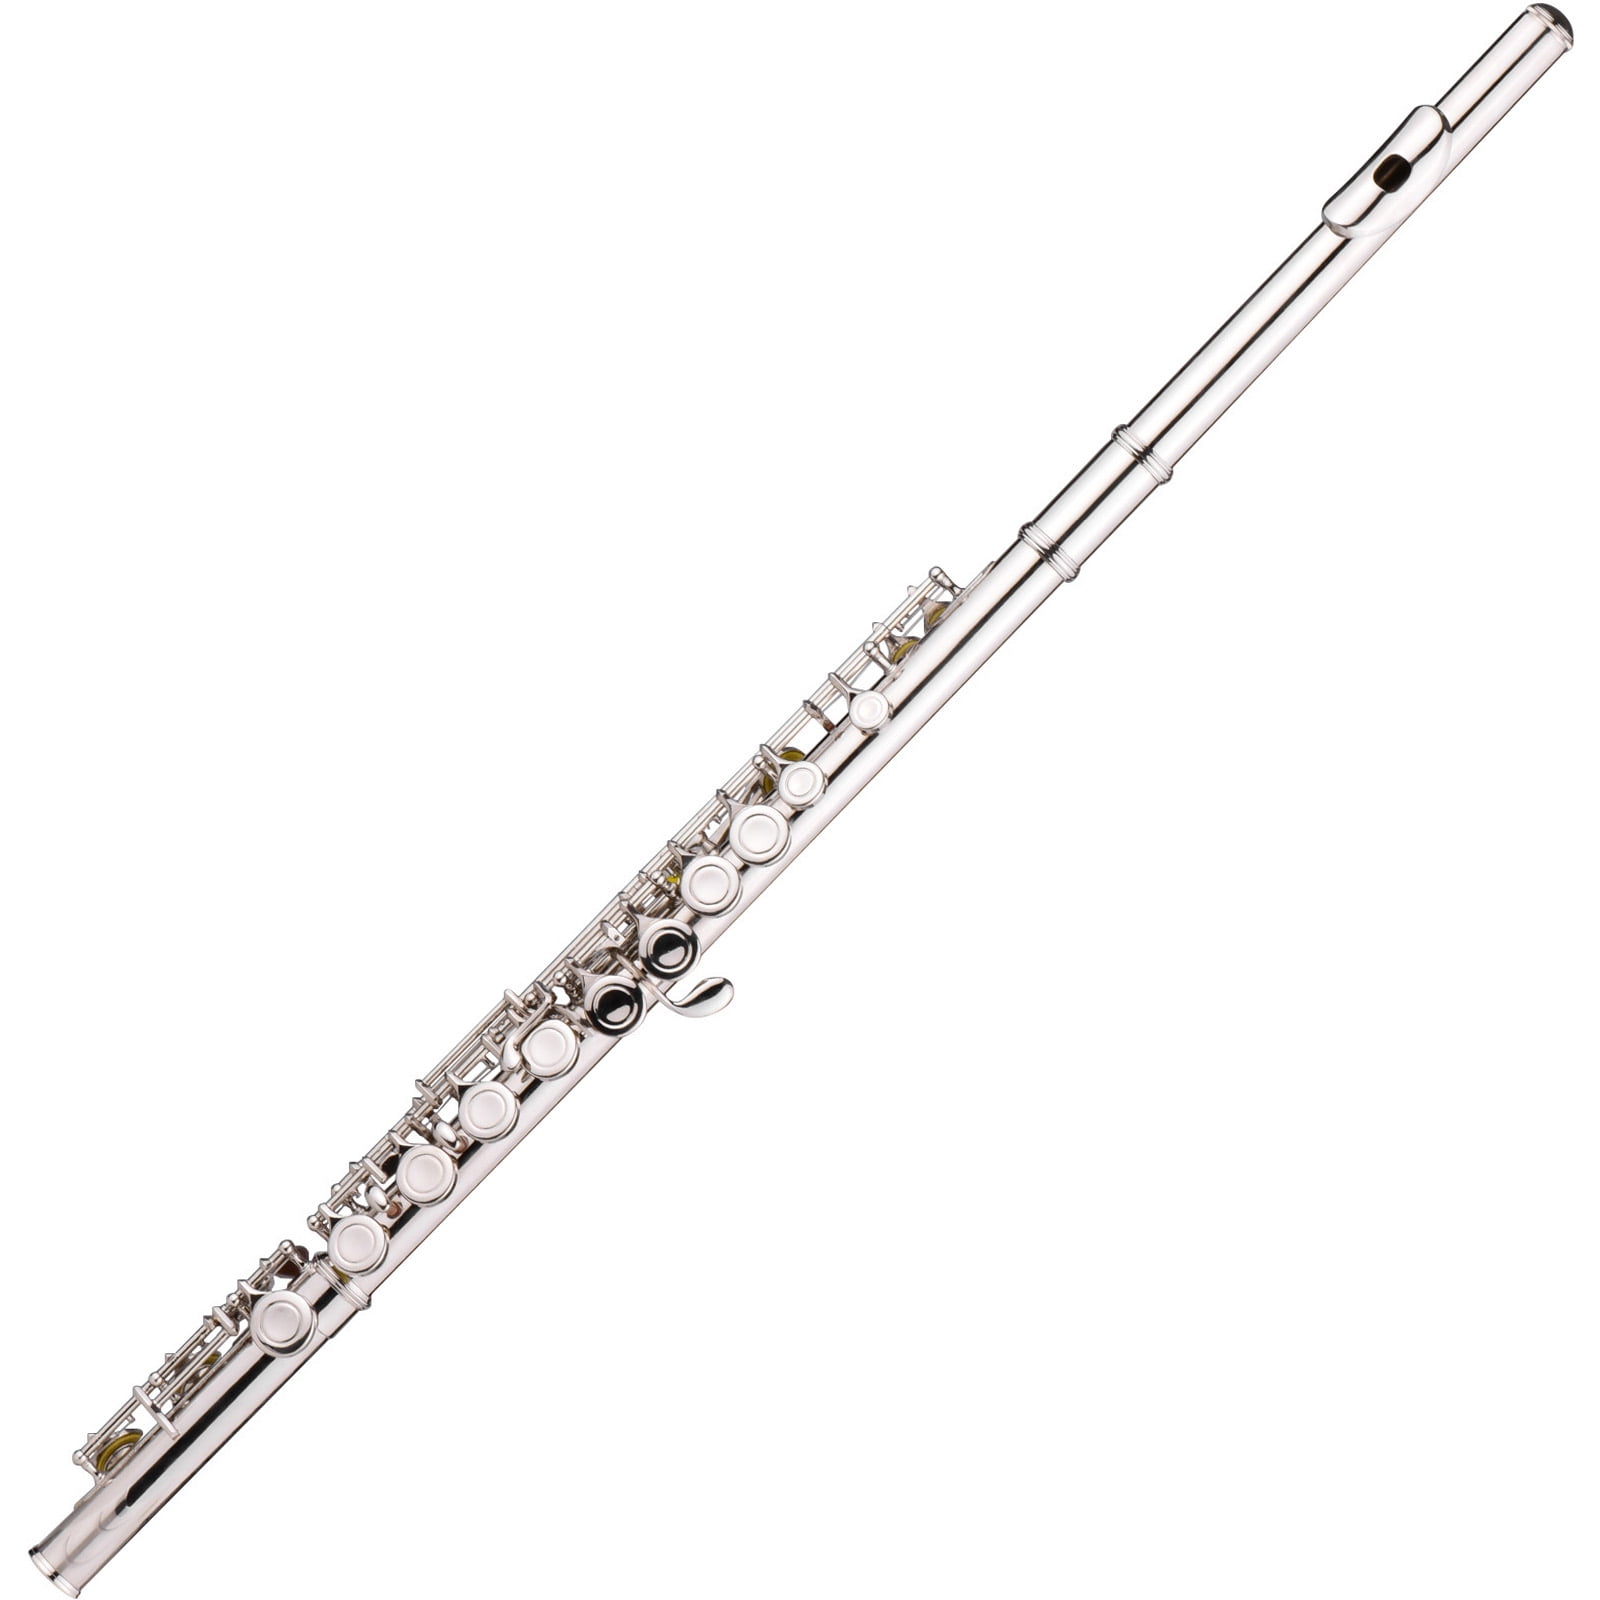 Walmeck Western Concert Flute Nickel Plated 16 Holes C Key Cupronickel ...